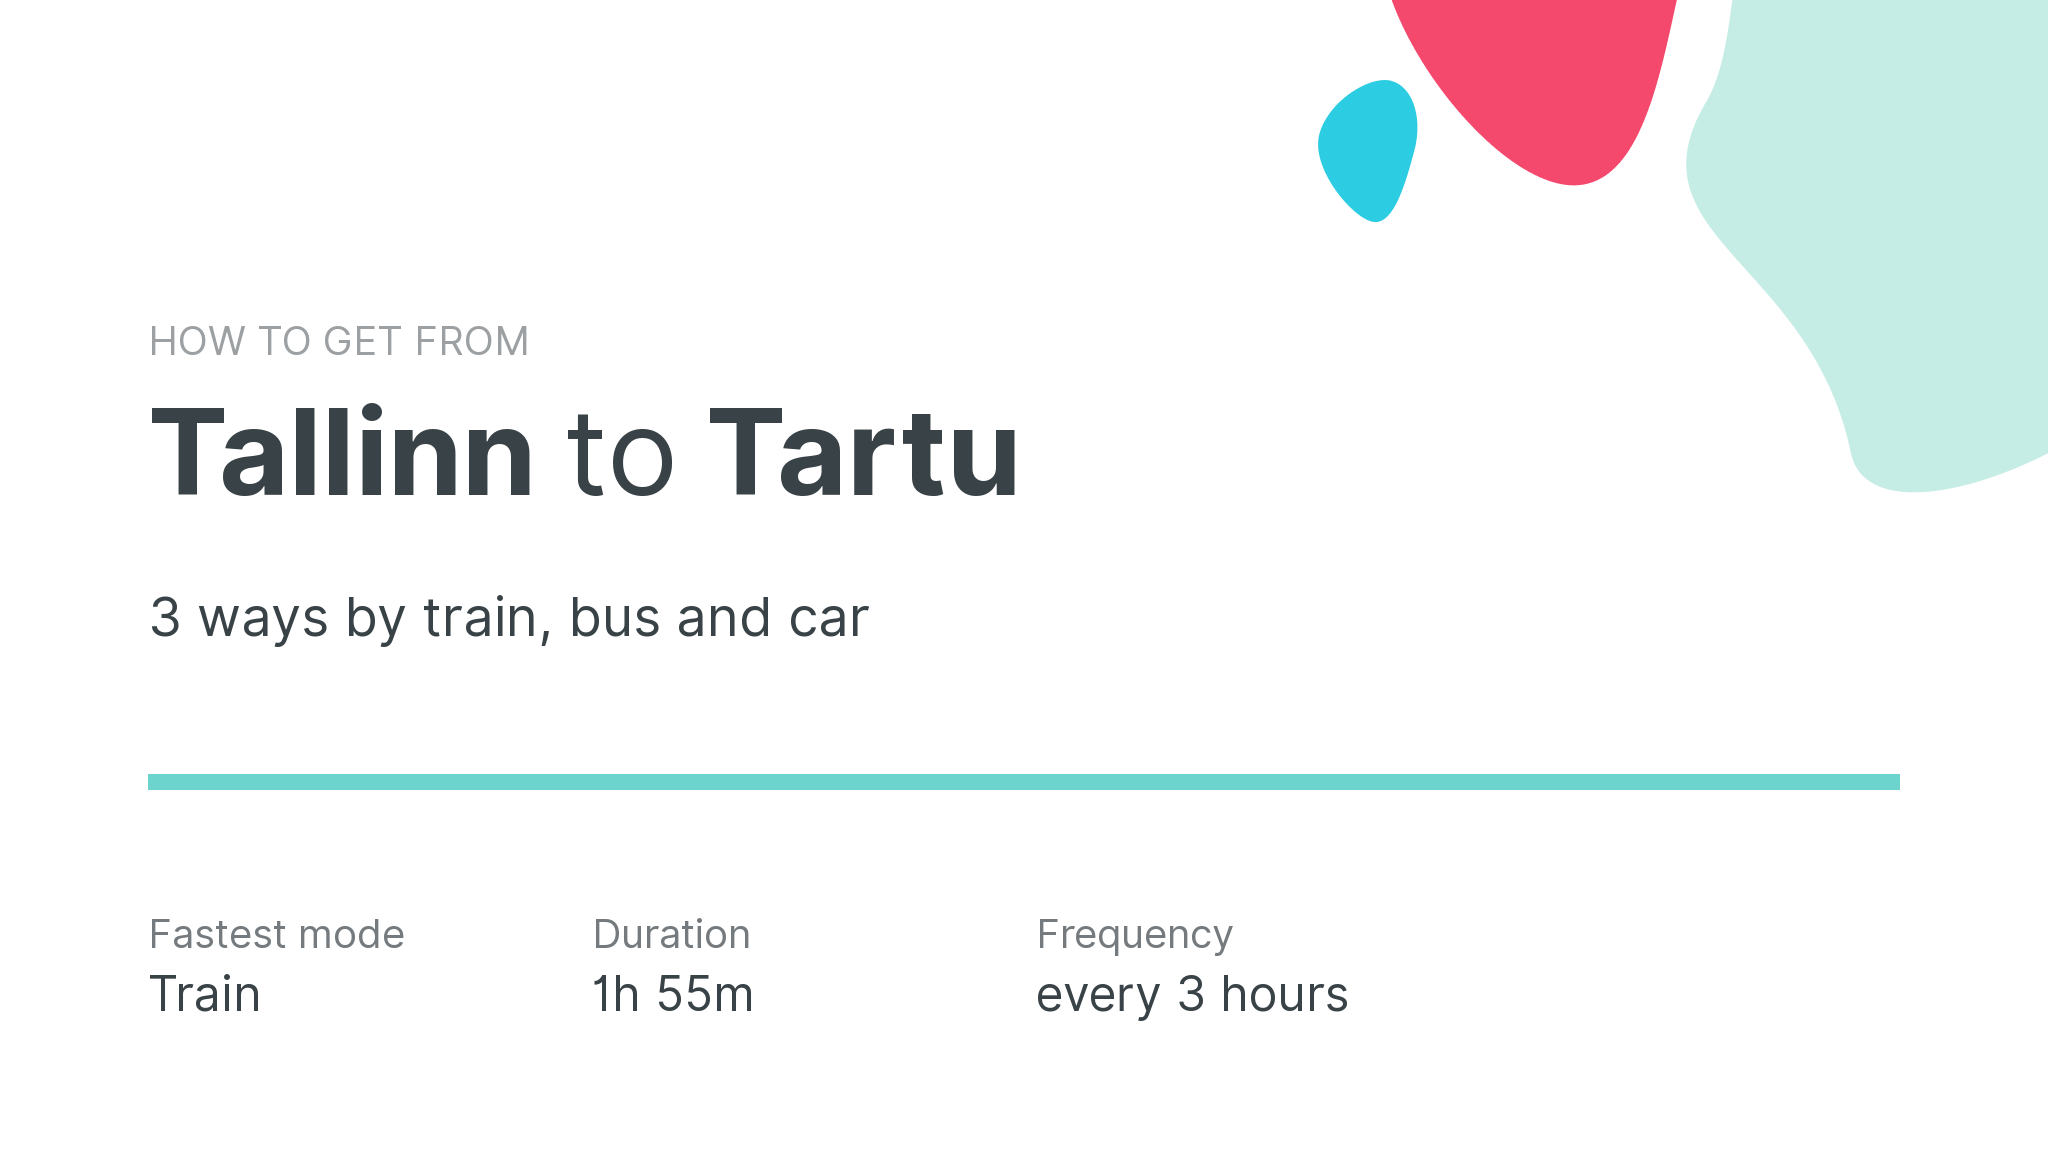 How do I get from Tallinn to Tartu